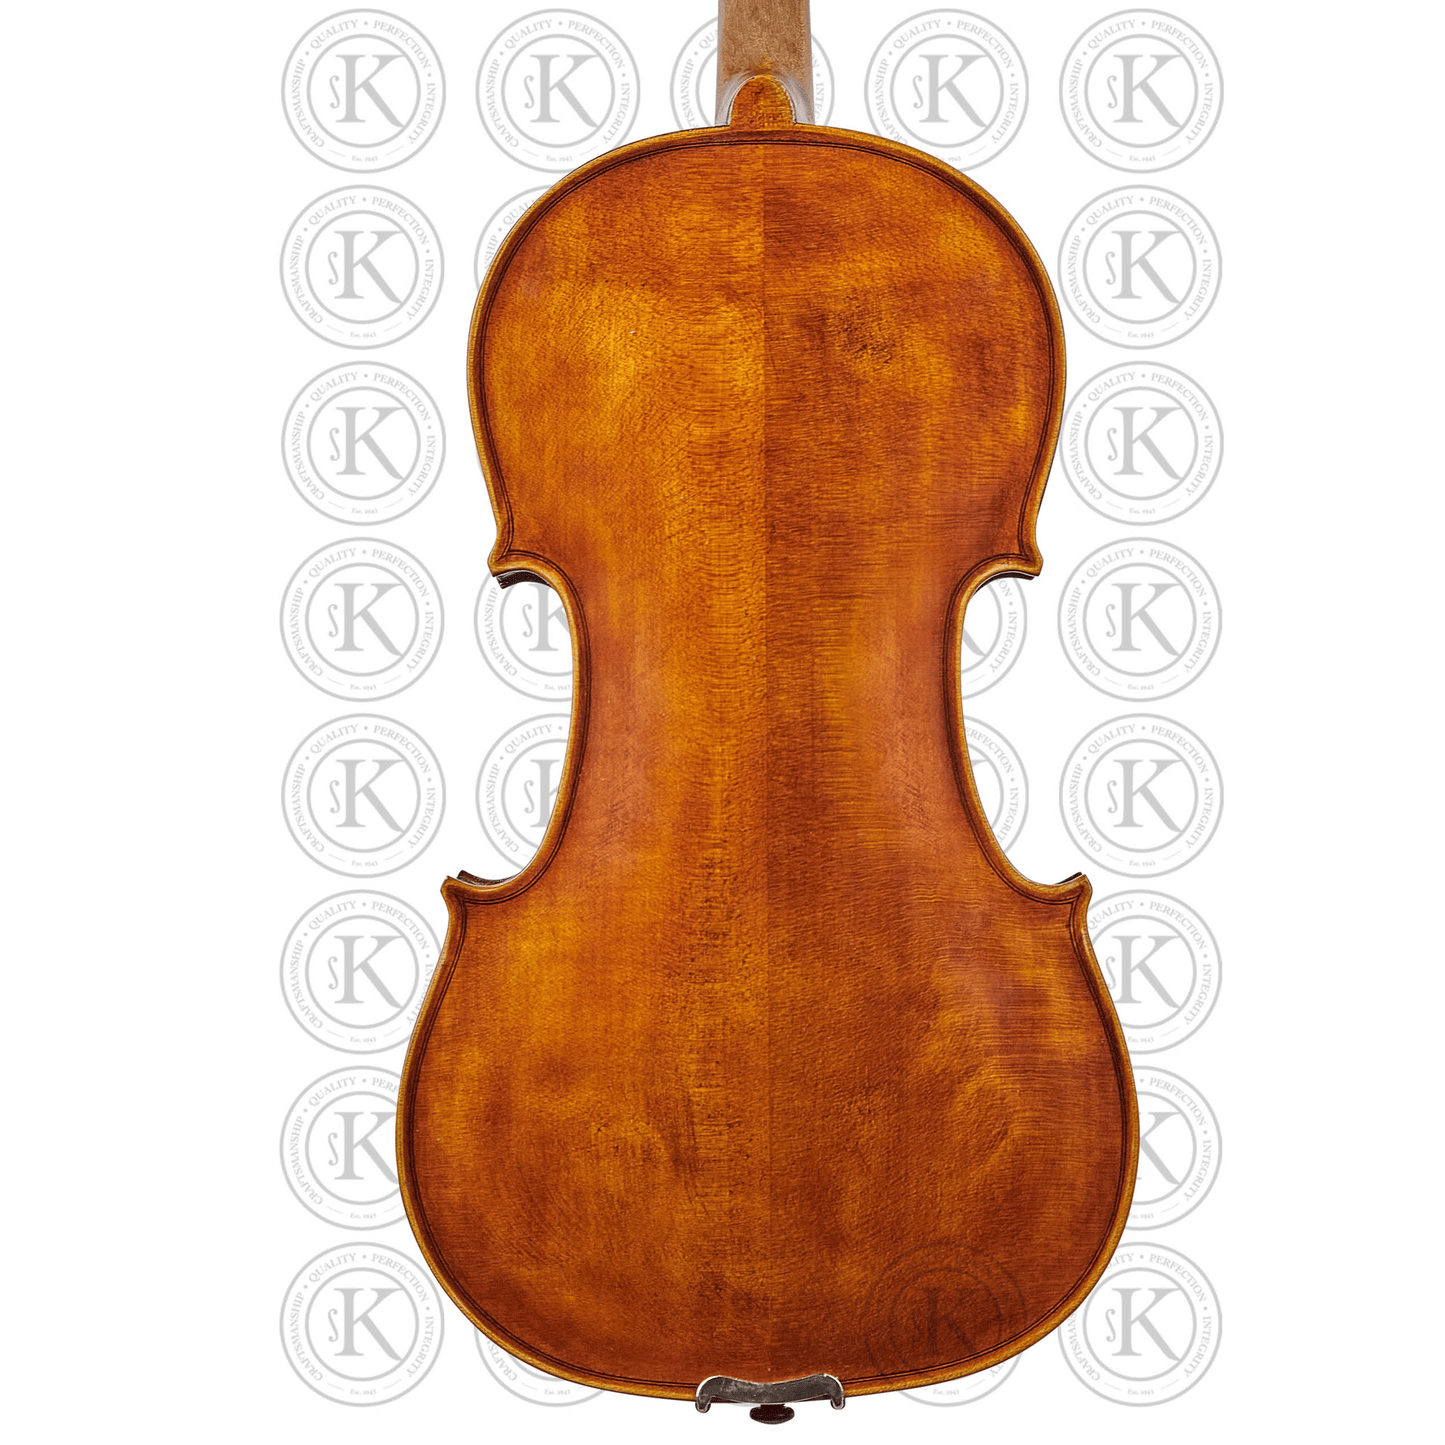 Liandro DiVacenza™ DVA50 Viola